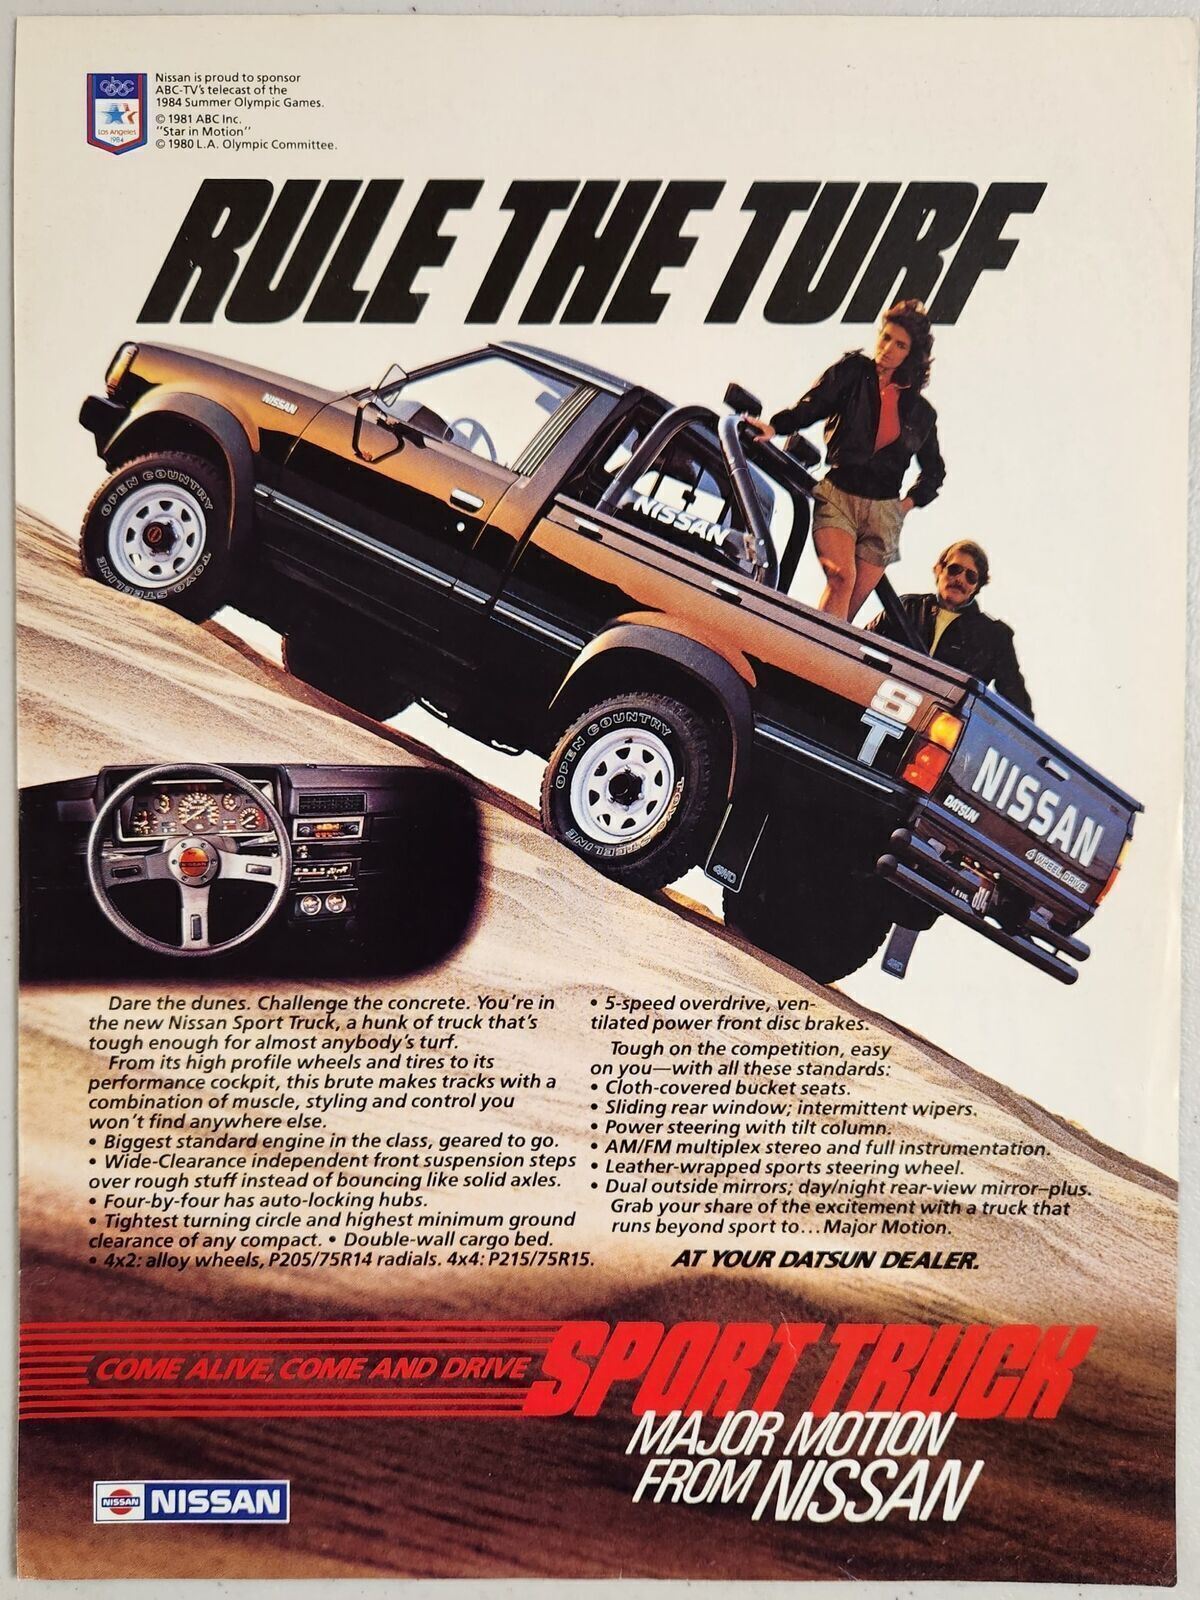 1984 Print Ad The Nissan Sport Truck 4 Wheel Drive at Datsun Dealers